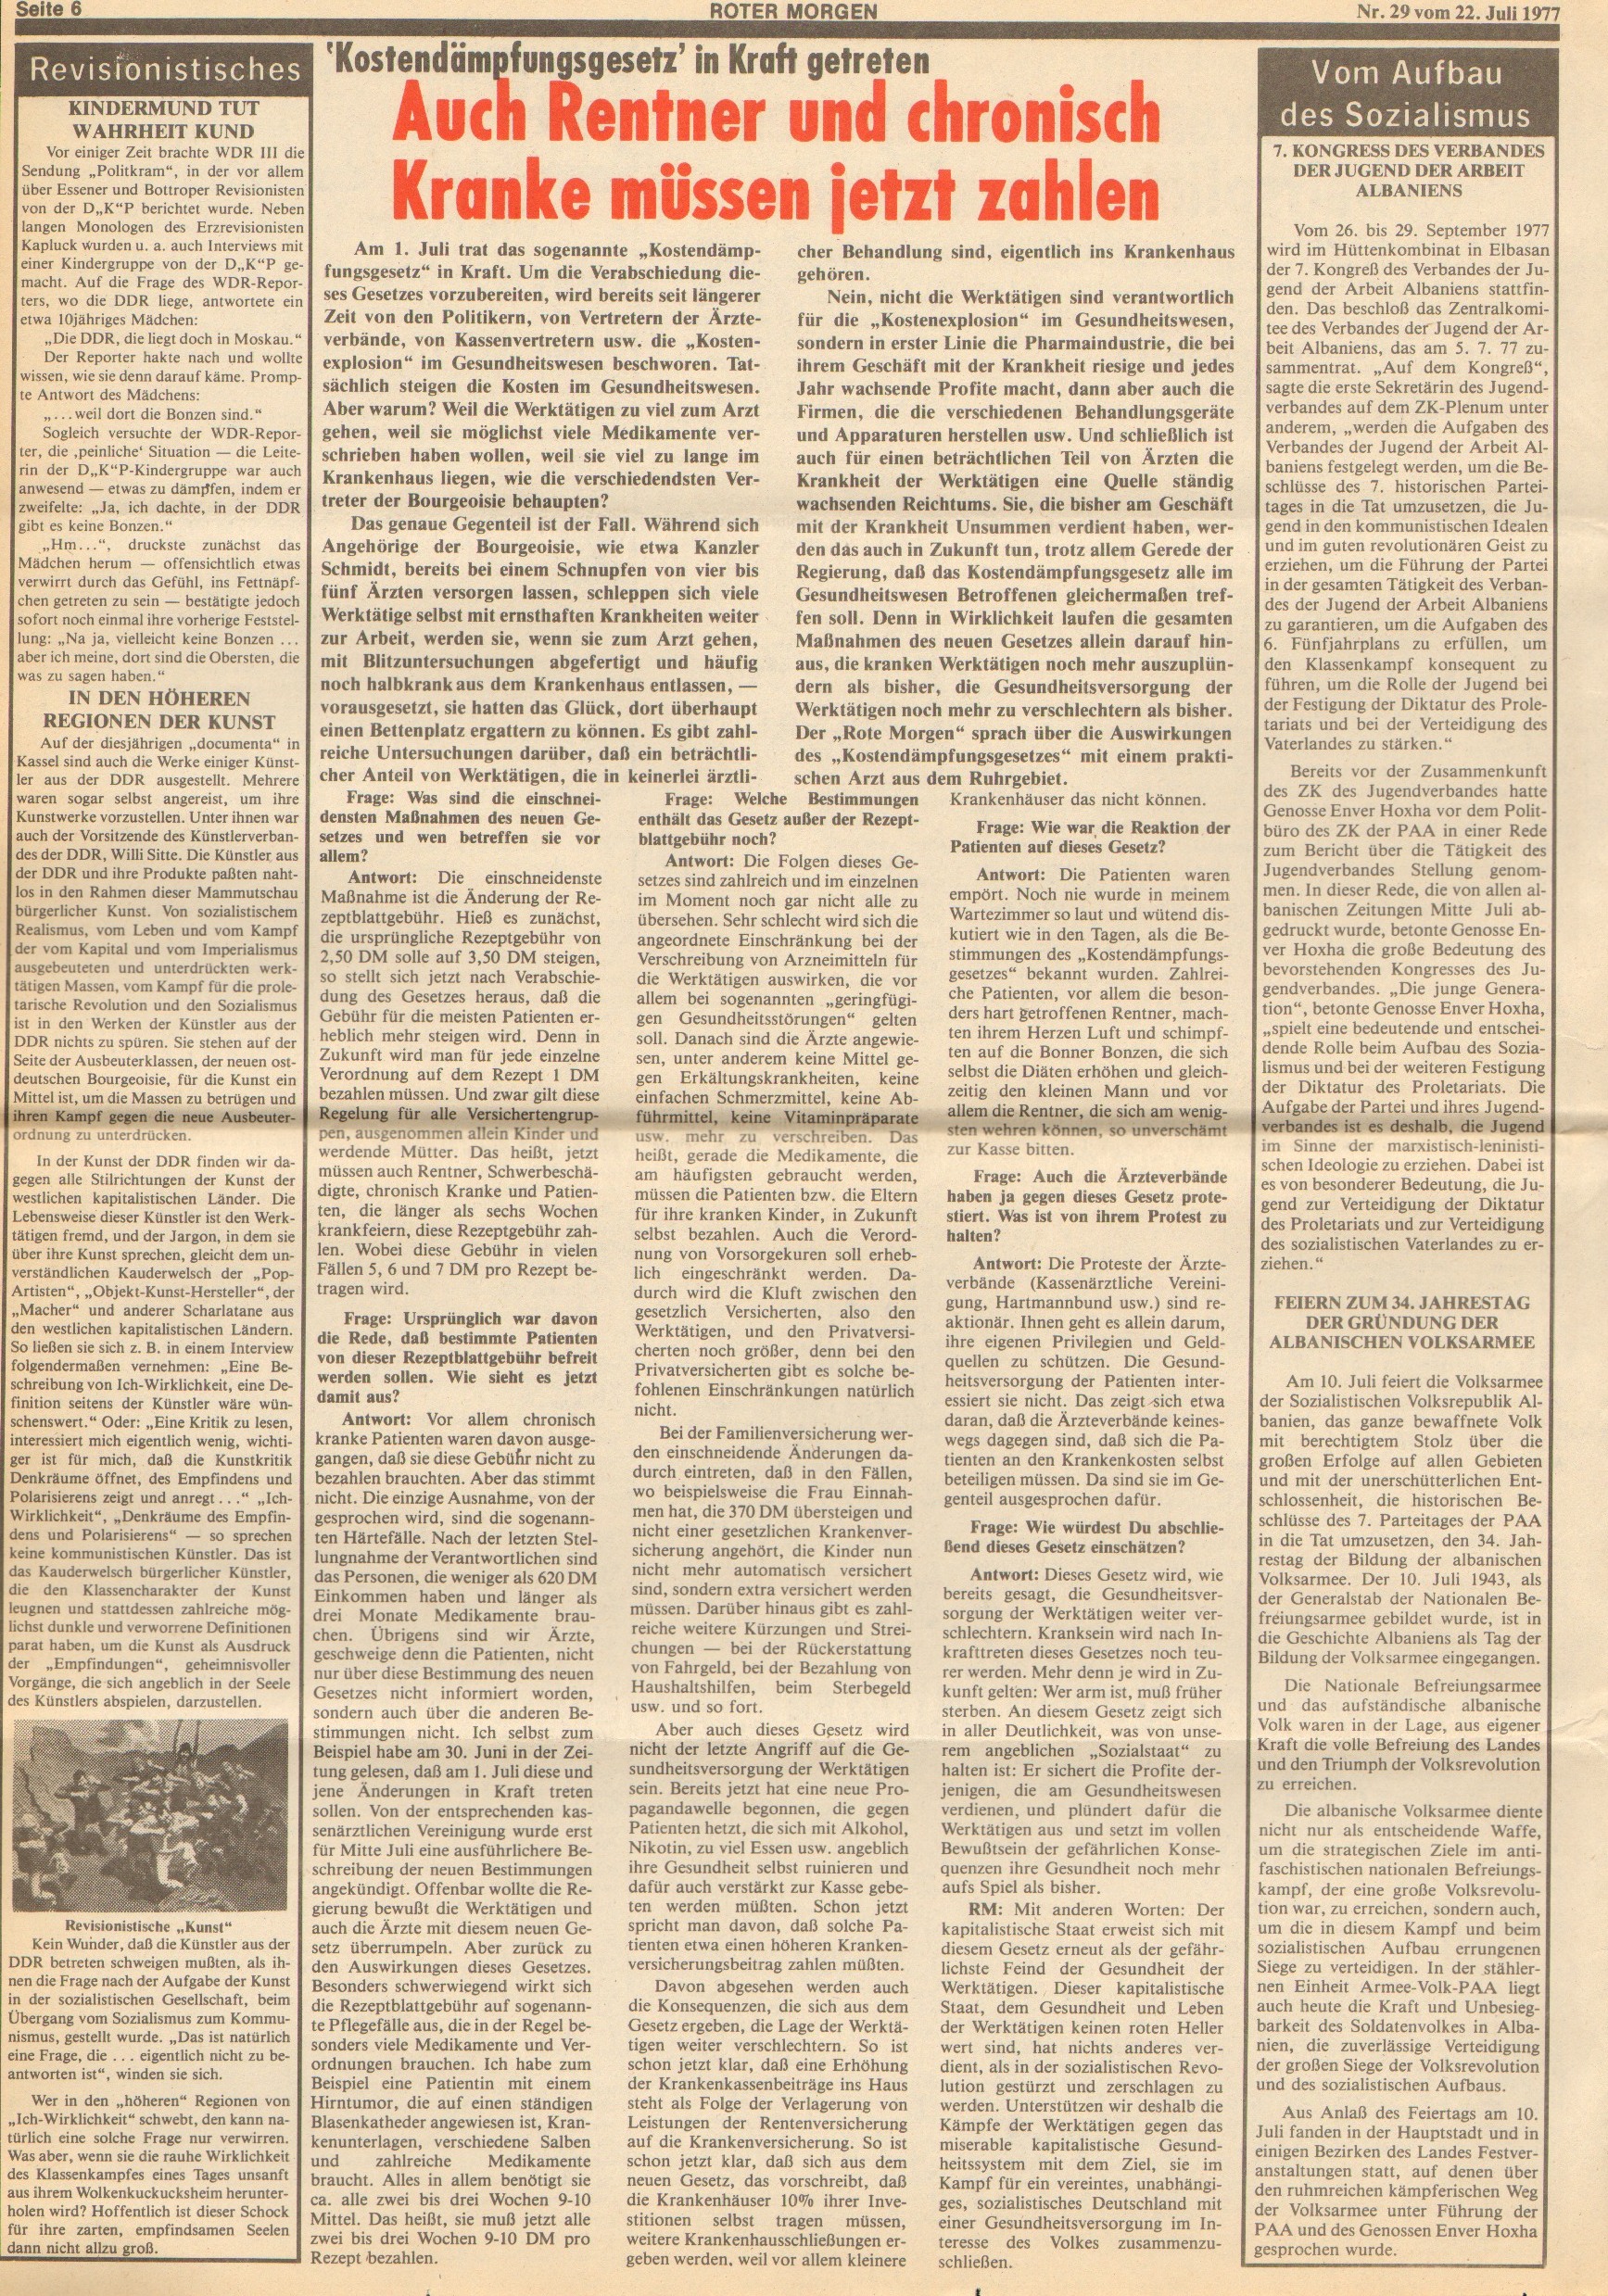 Roter Morgen, 11. Jg., 22. Juli 1977, Nr. 29, Seite 6